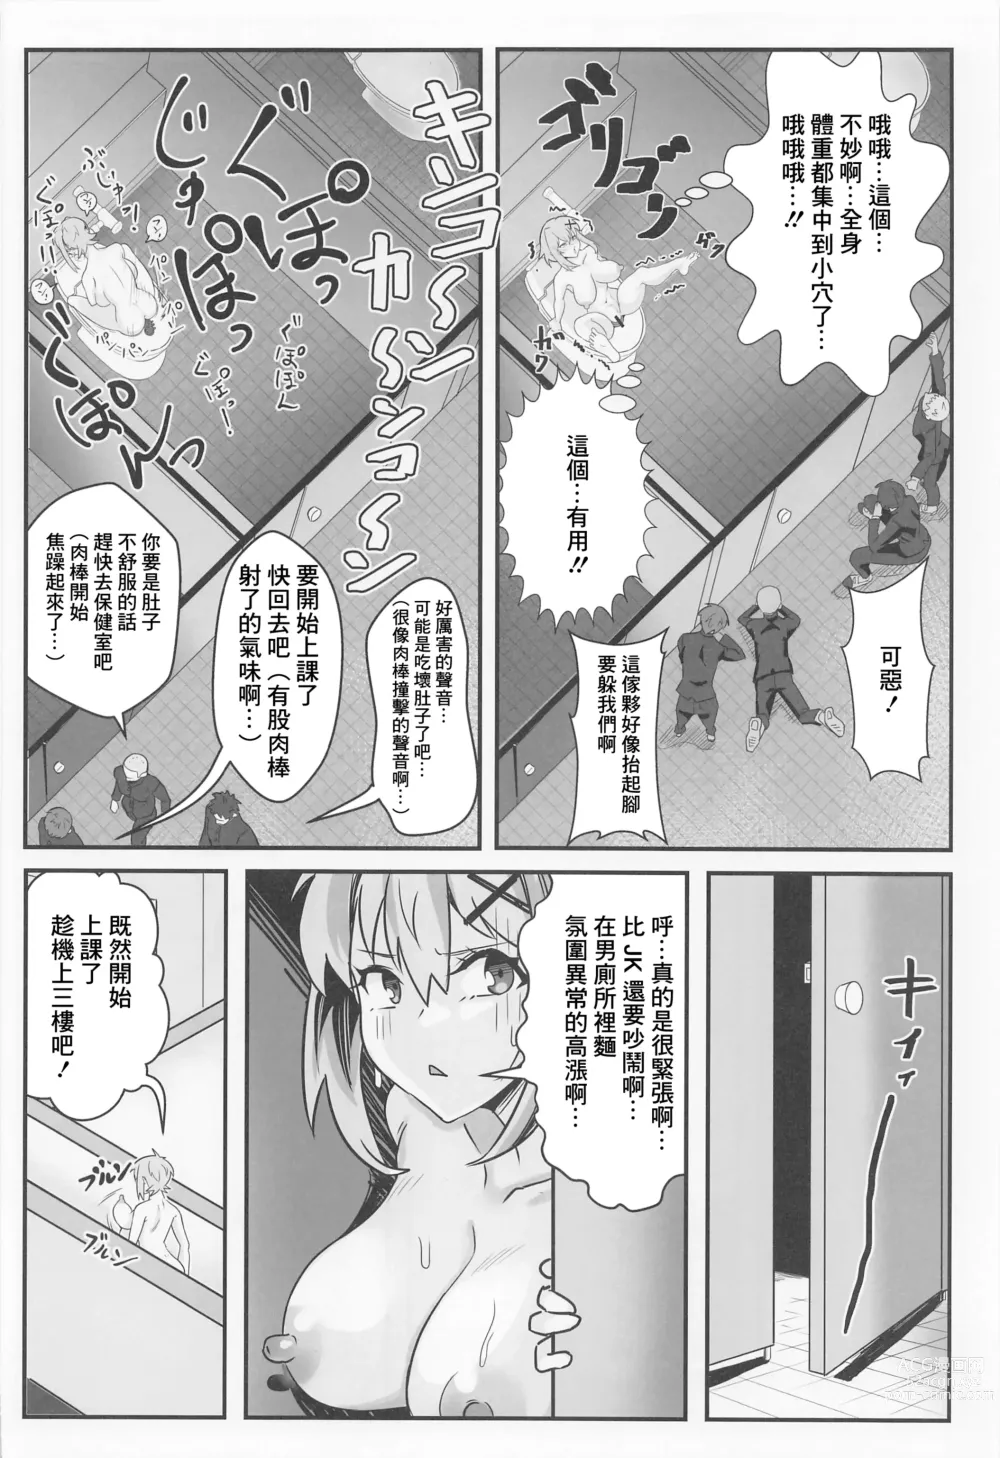 Page 13 of doujinshi Kiri-chan no Danshikounai Roshutsu Haikai Quest